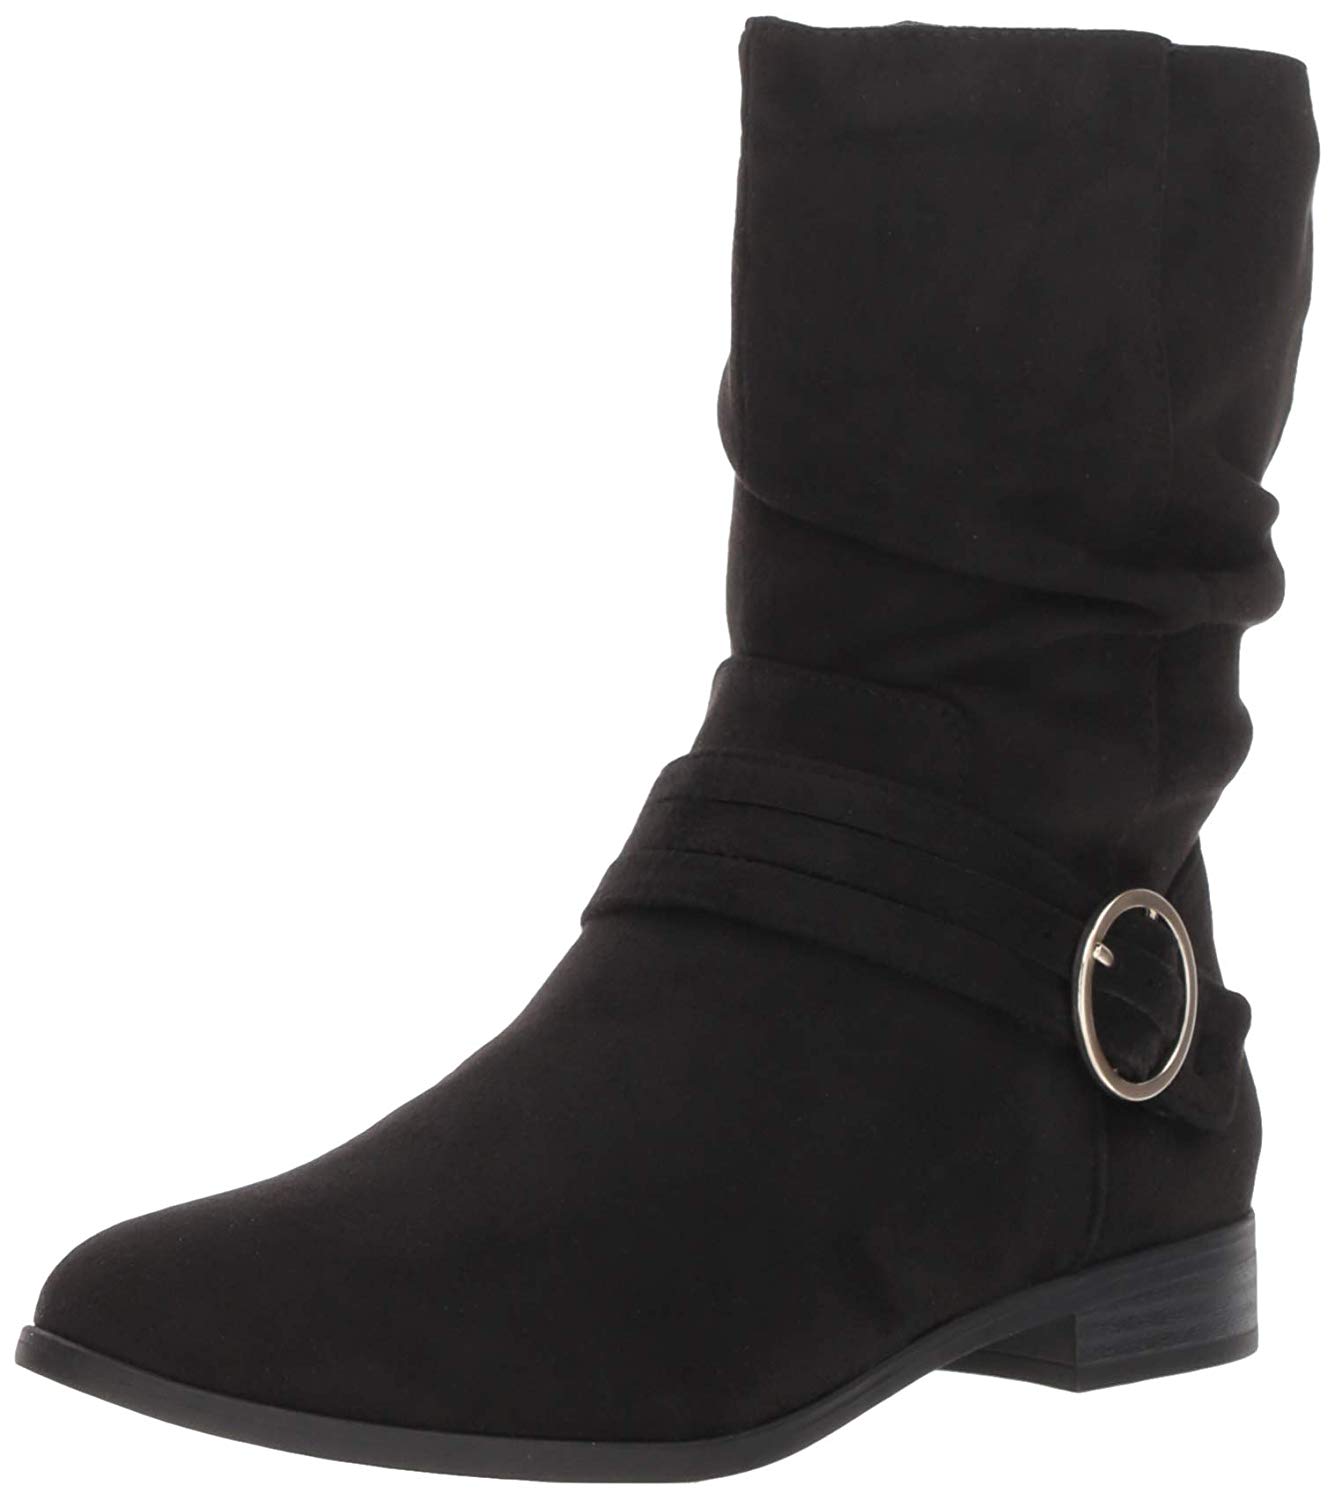 Dr. Scholl's Shoes Women's Ripple Mid Calf Boot, Black Microfiber, Size ...